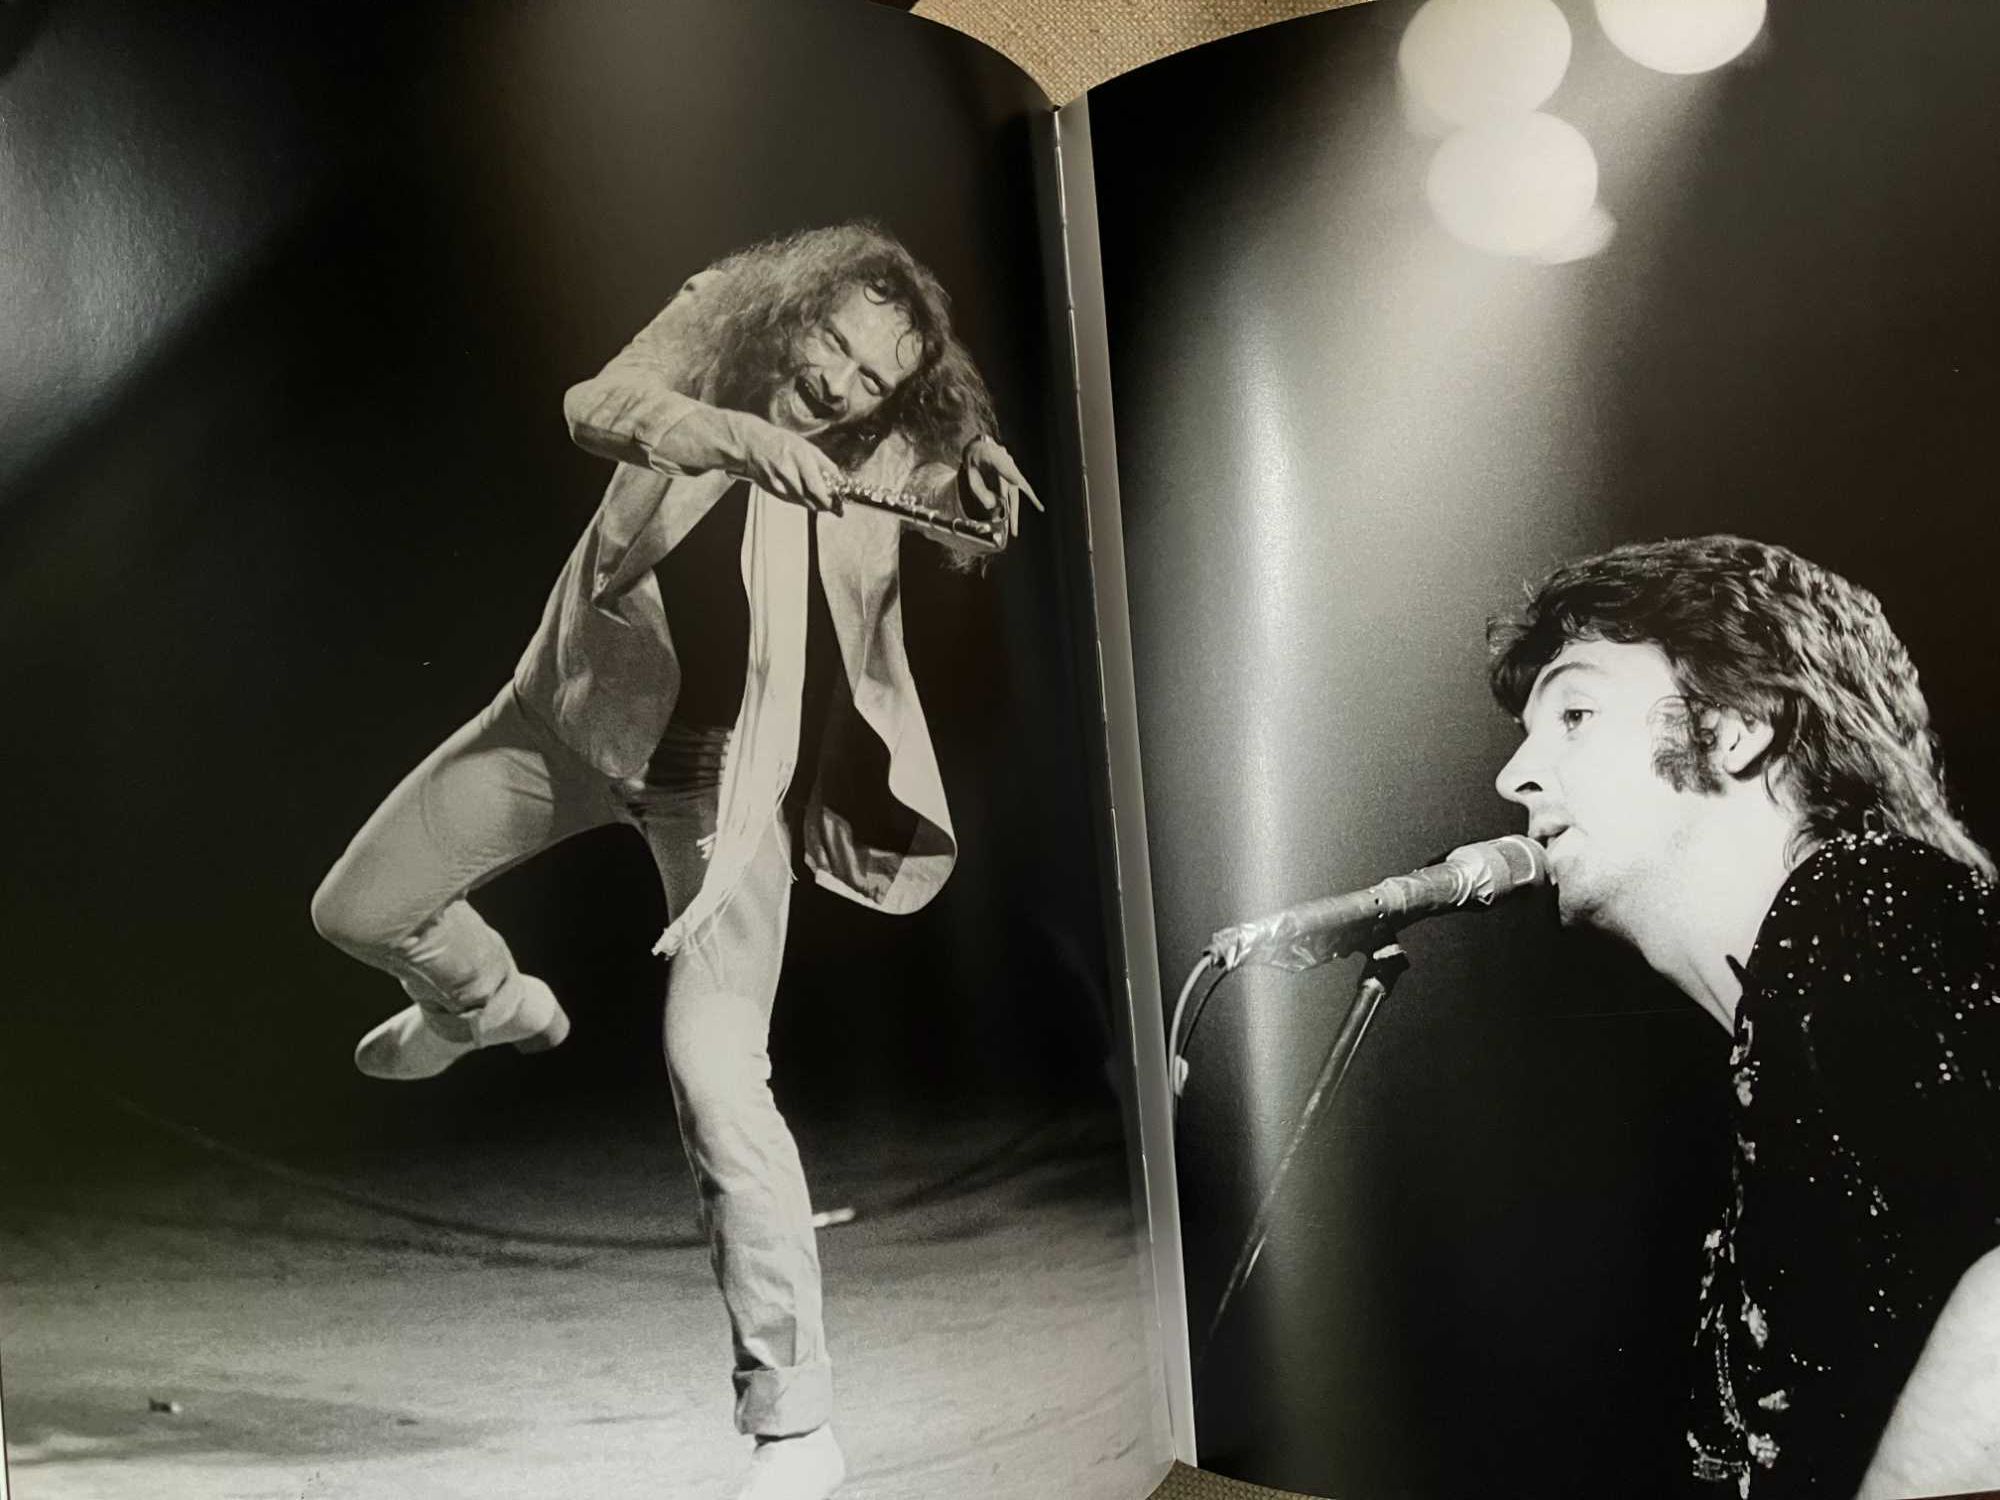 Foto-Album muzyczny" Golden Years  70-80 "